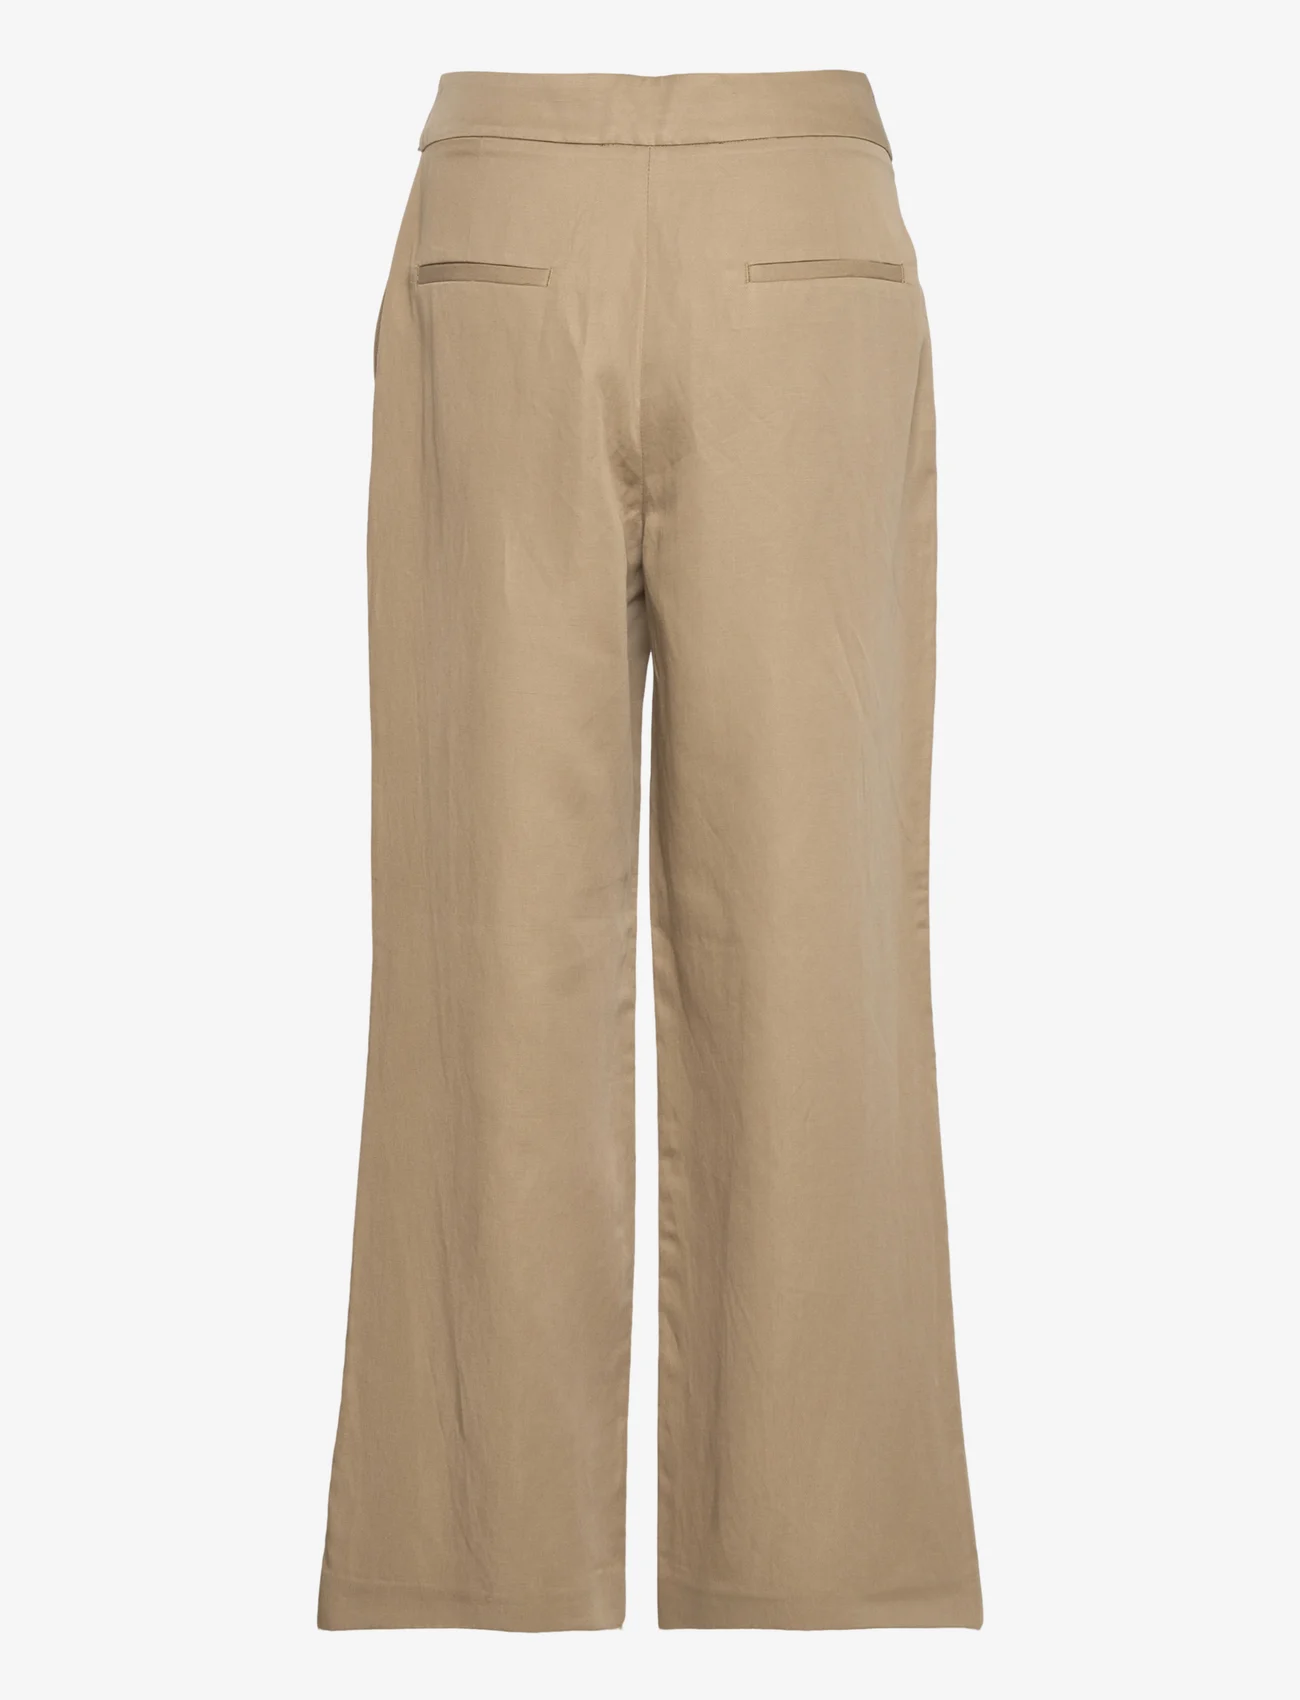 Esprit Collection - Women Pants woven length service - plačios kelnės - khaki green - 1